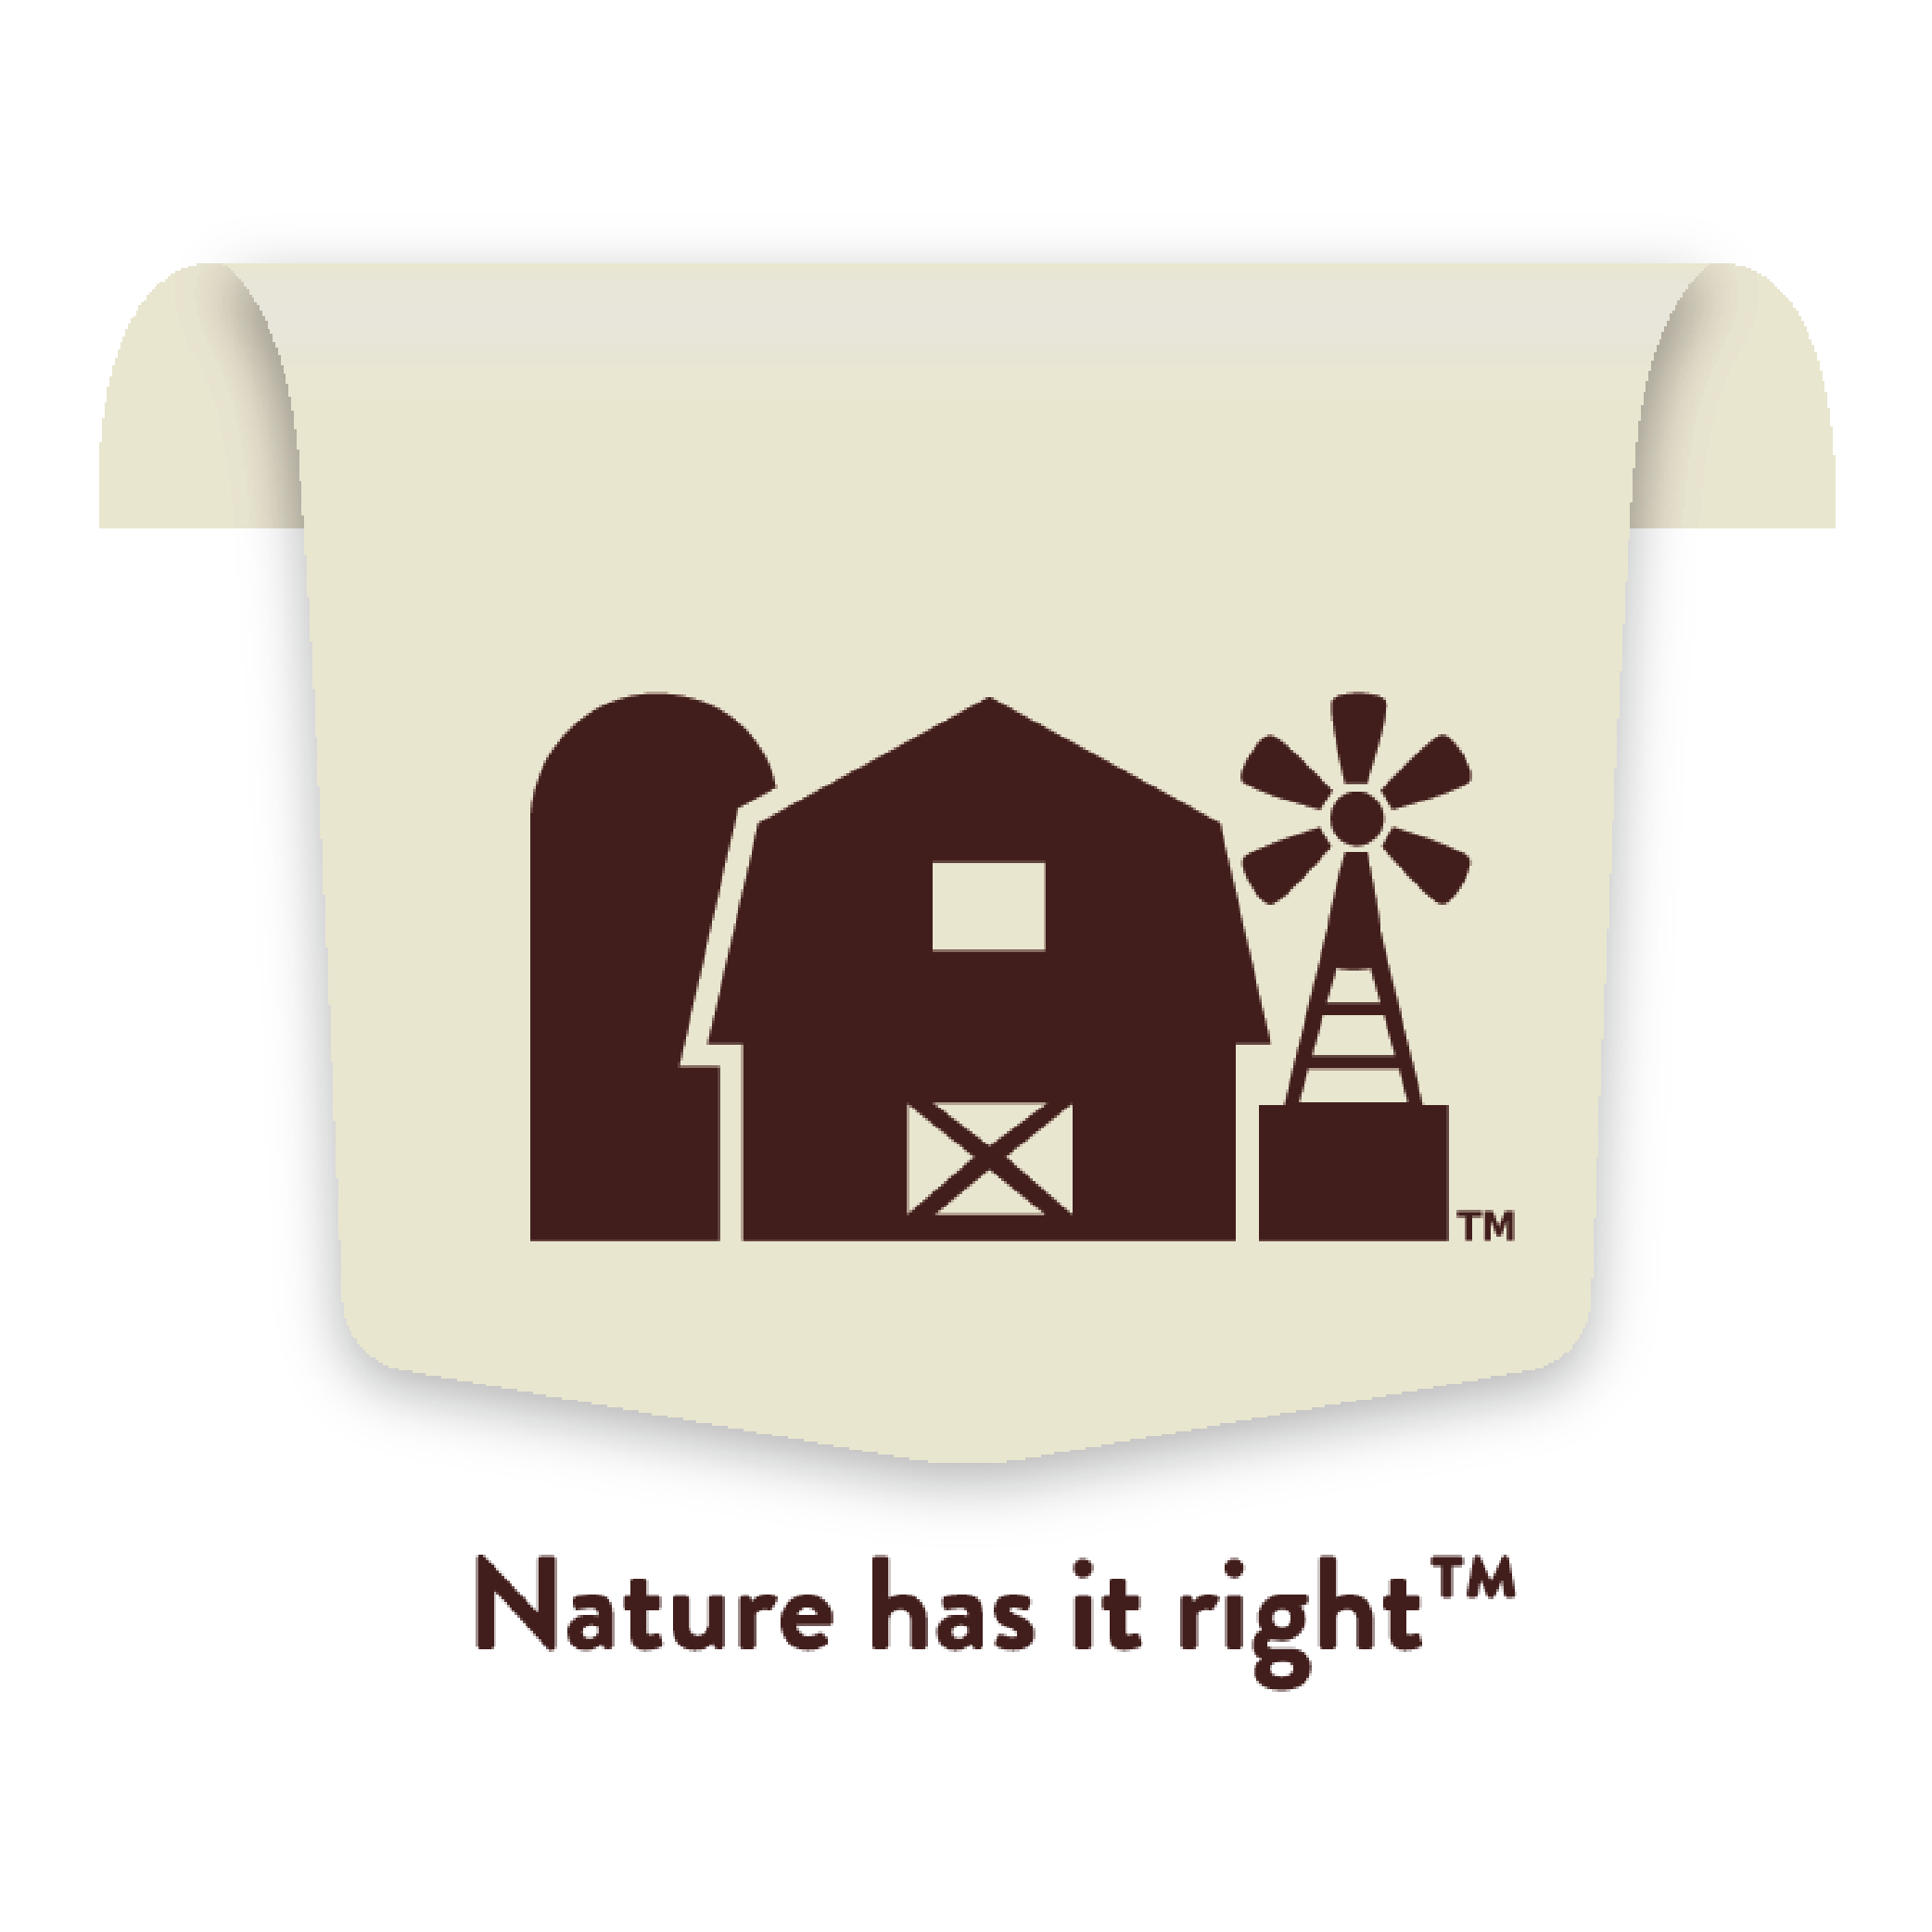 Redmond Agriculture Logo and Tagline